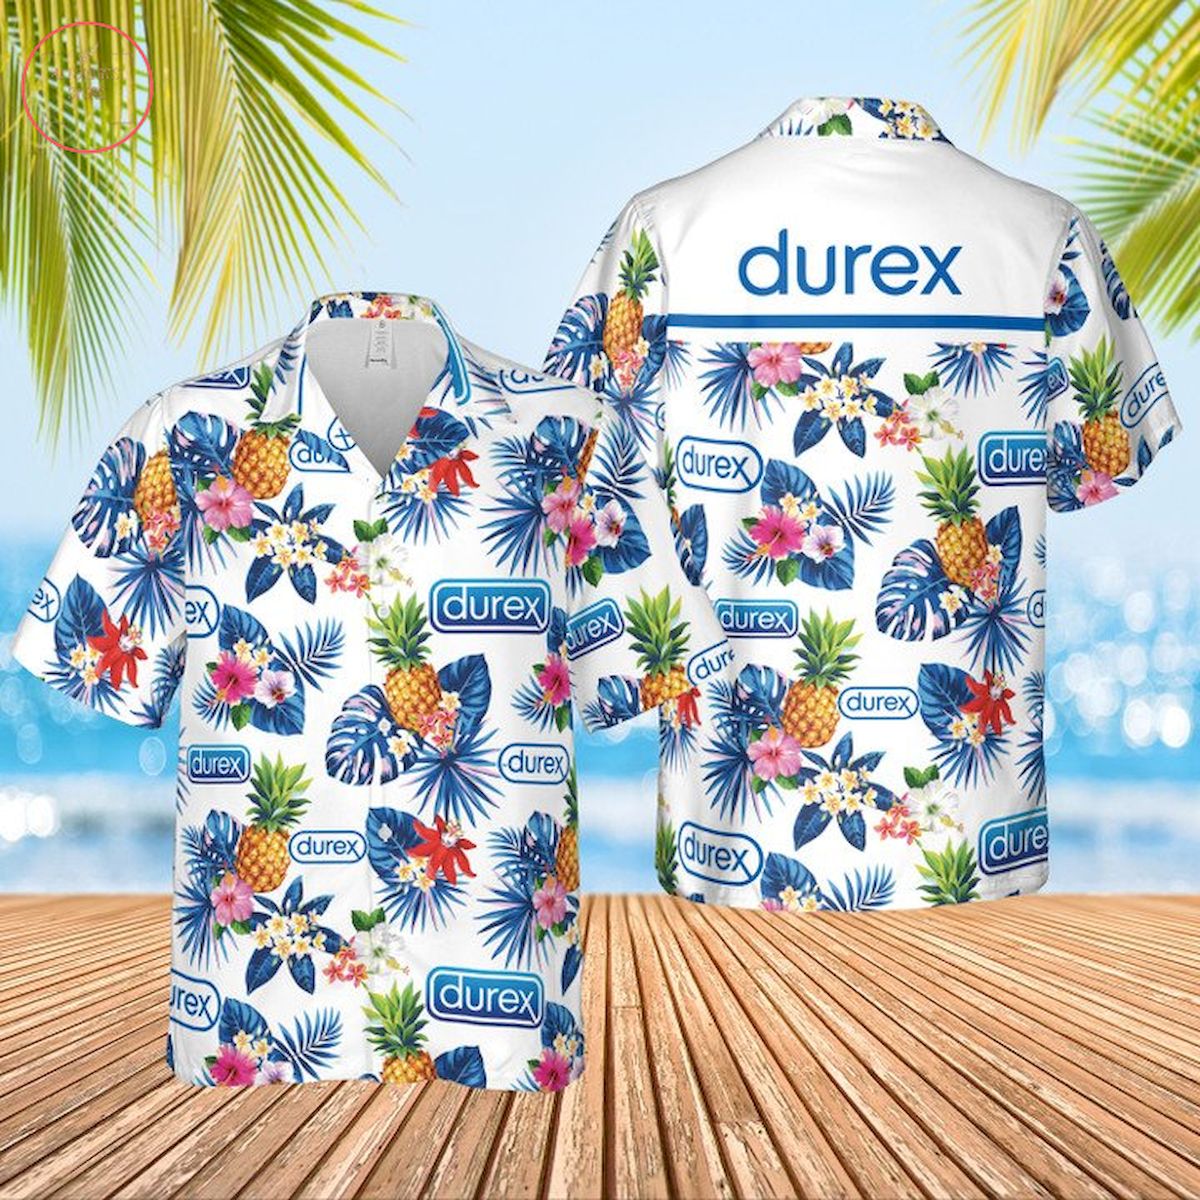 Durex Condoms Logo Hawaiian Shirt and Shorts